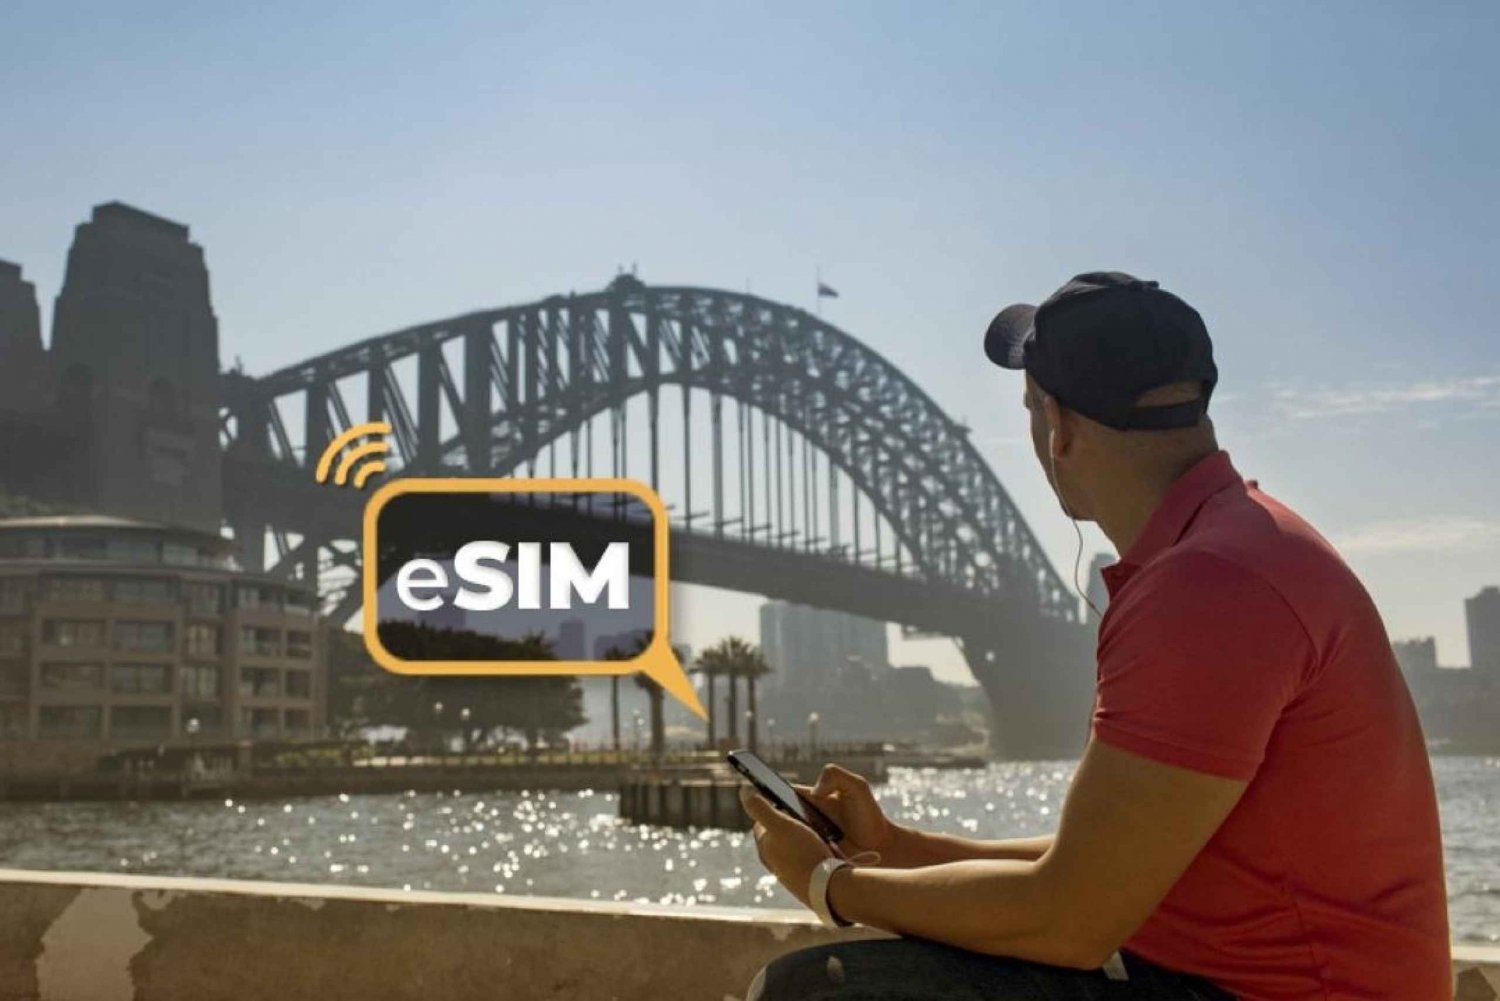 Sydney & Australien: Roaming-Internet mit eSIM Mobile Daten